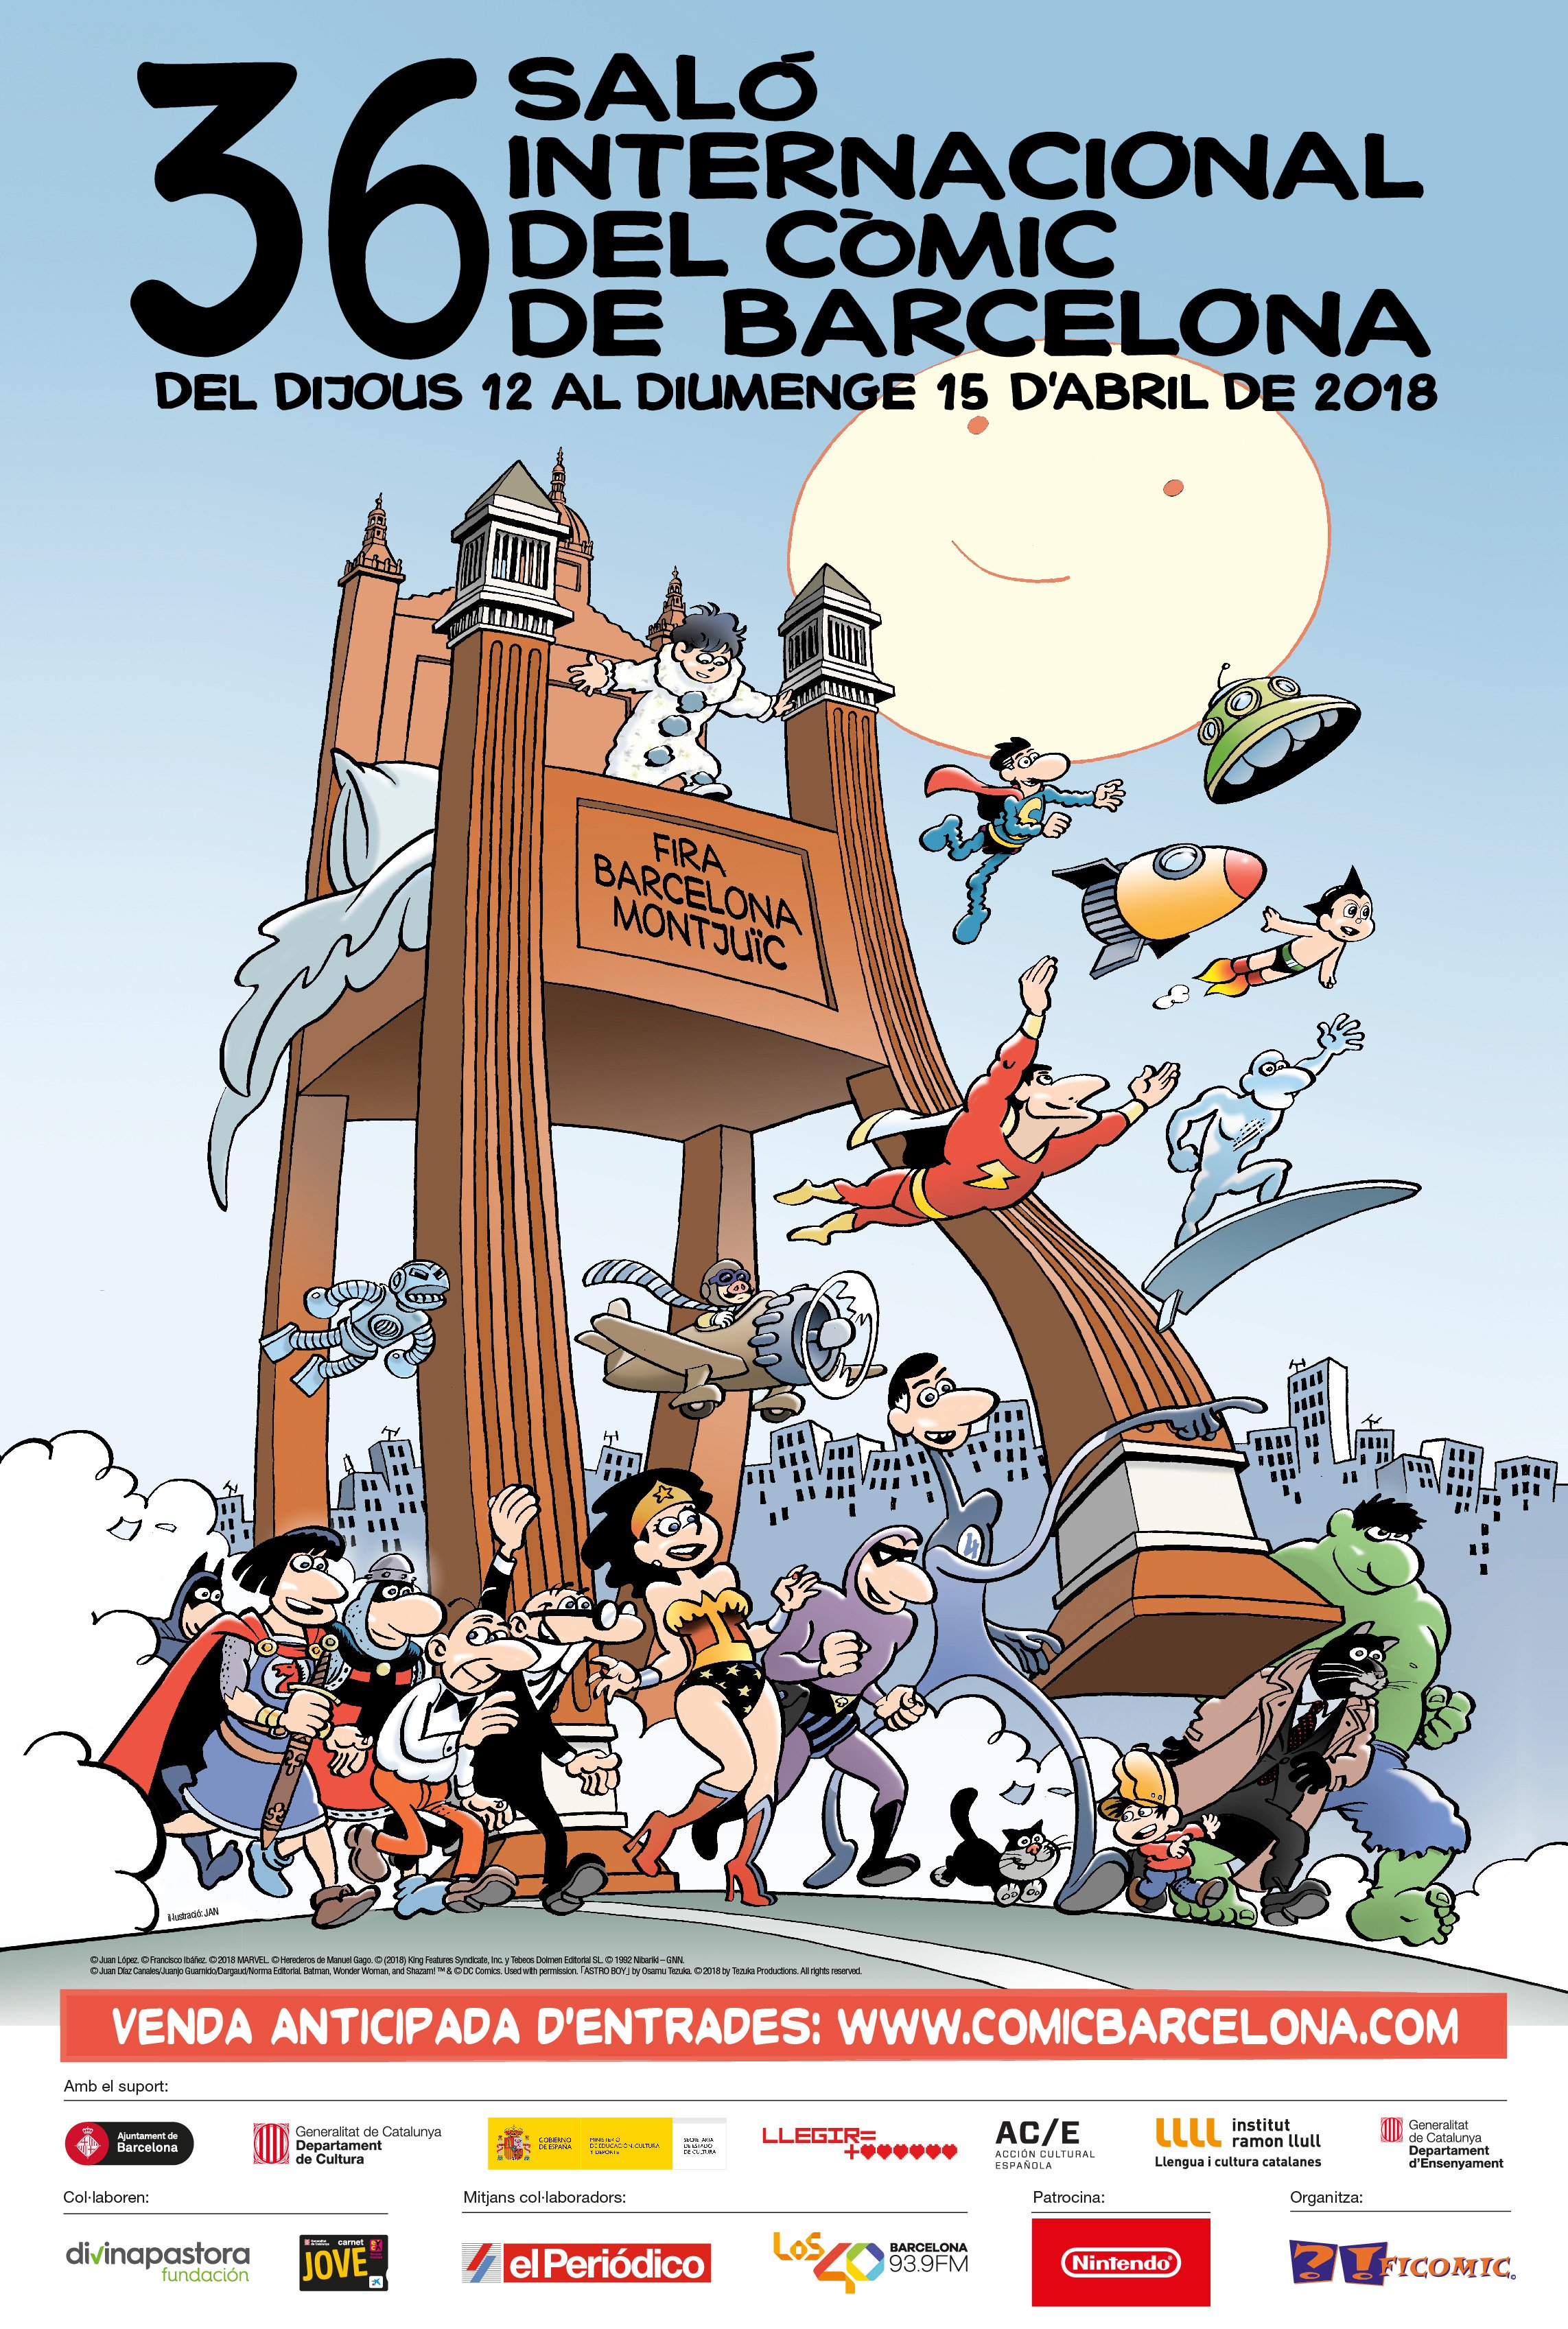 36 Salo Internacional del Comic de Barcelona